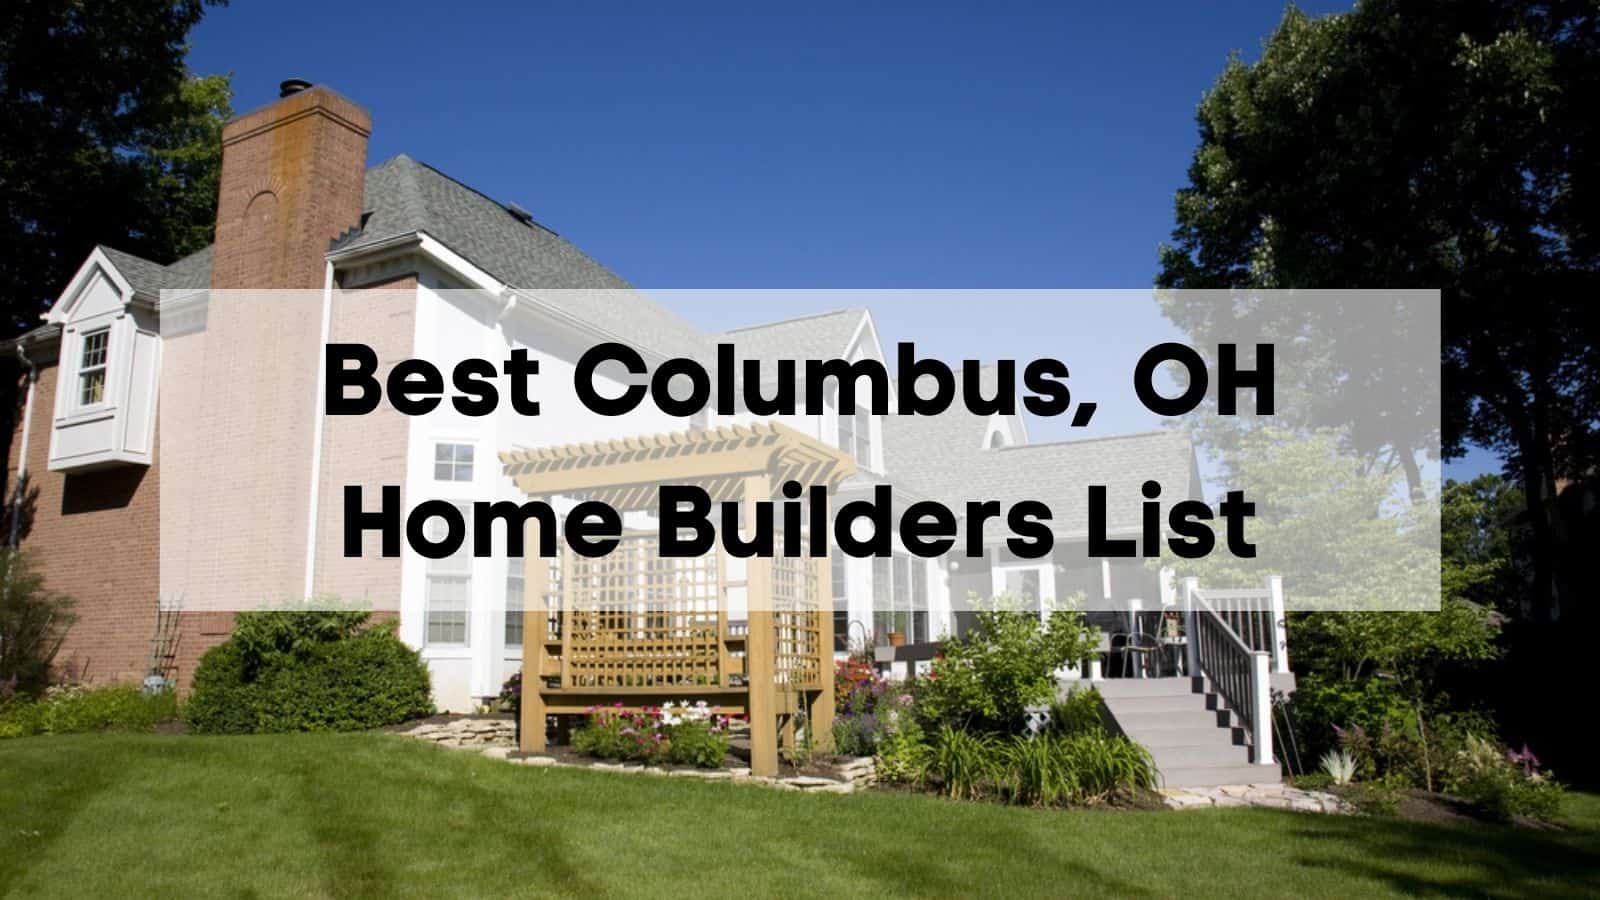 Best Columbus, OH Home Builders List